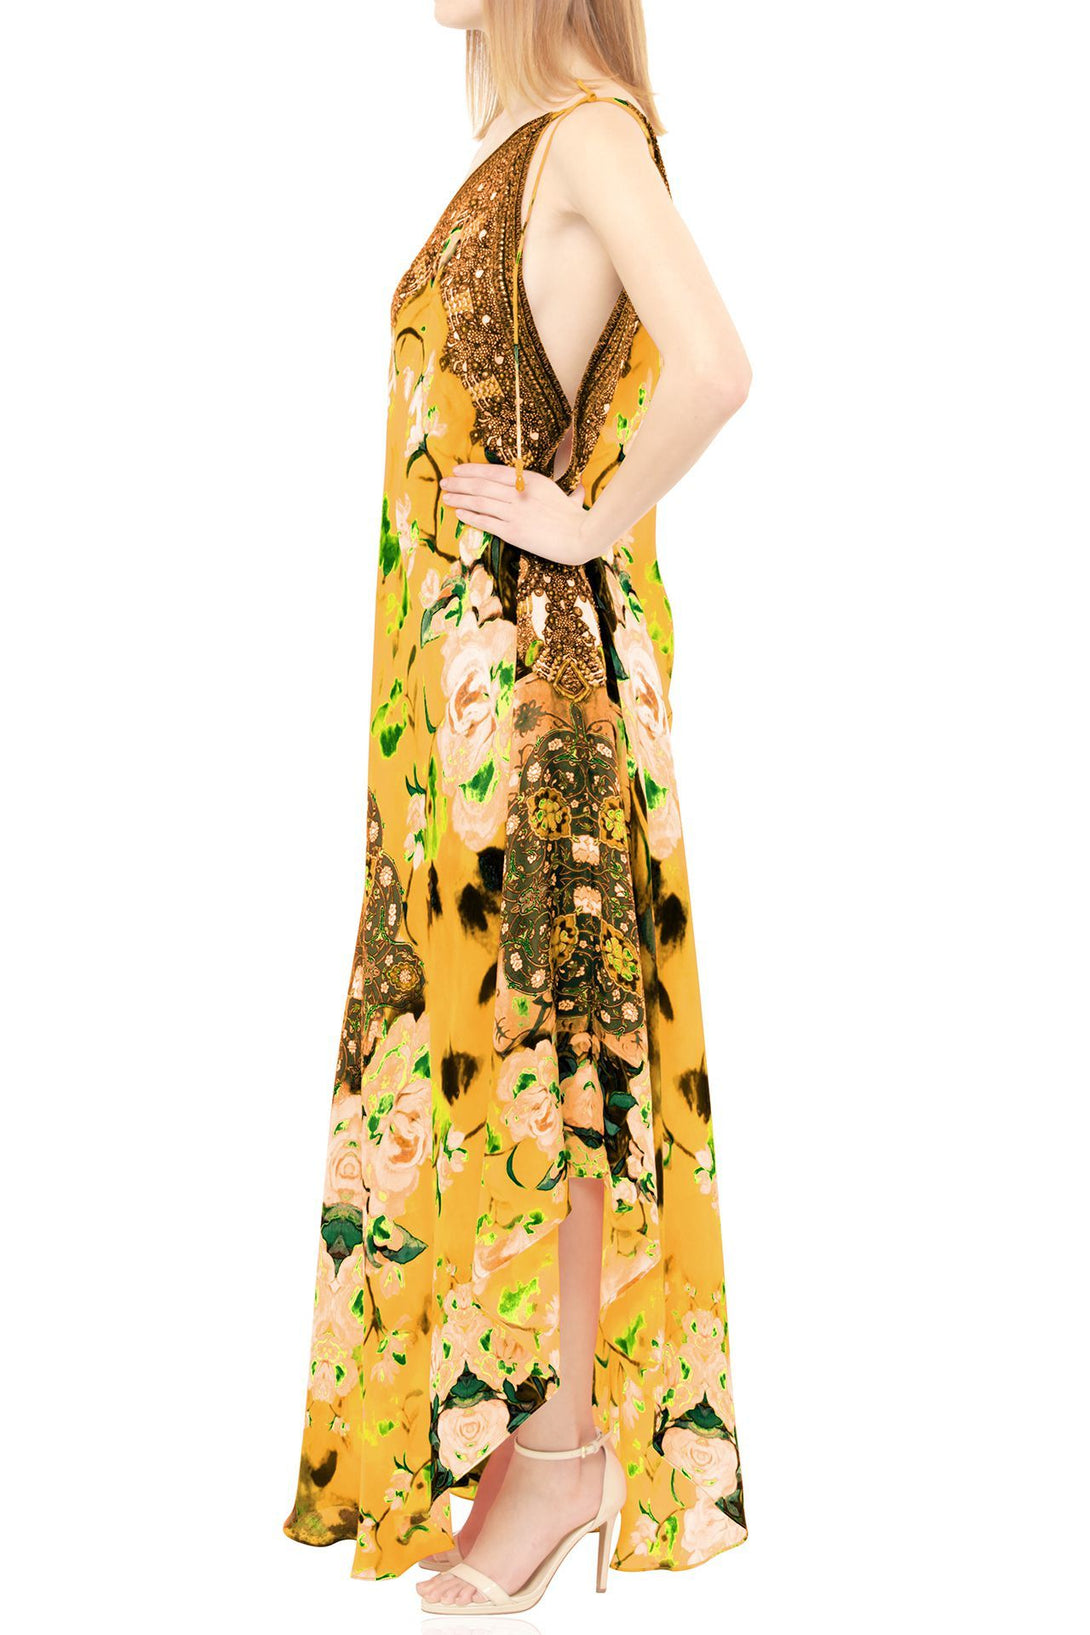  yellow floral dress maxi, Shahida Parides, beach maxi dress, long summer dresses, backless maxi dress,